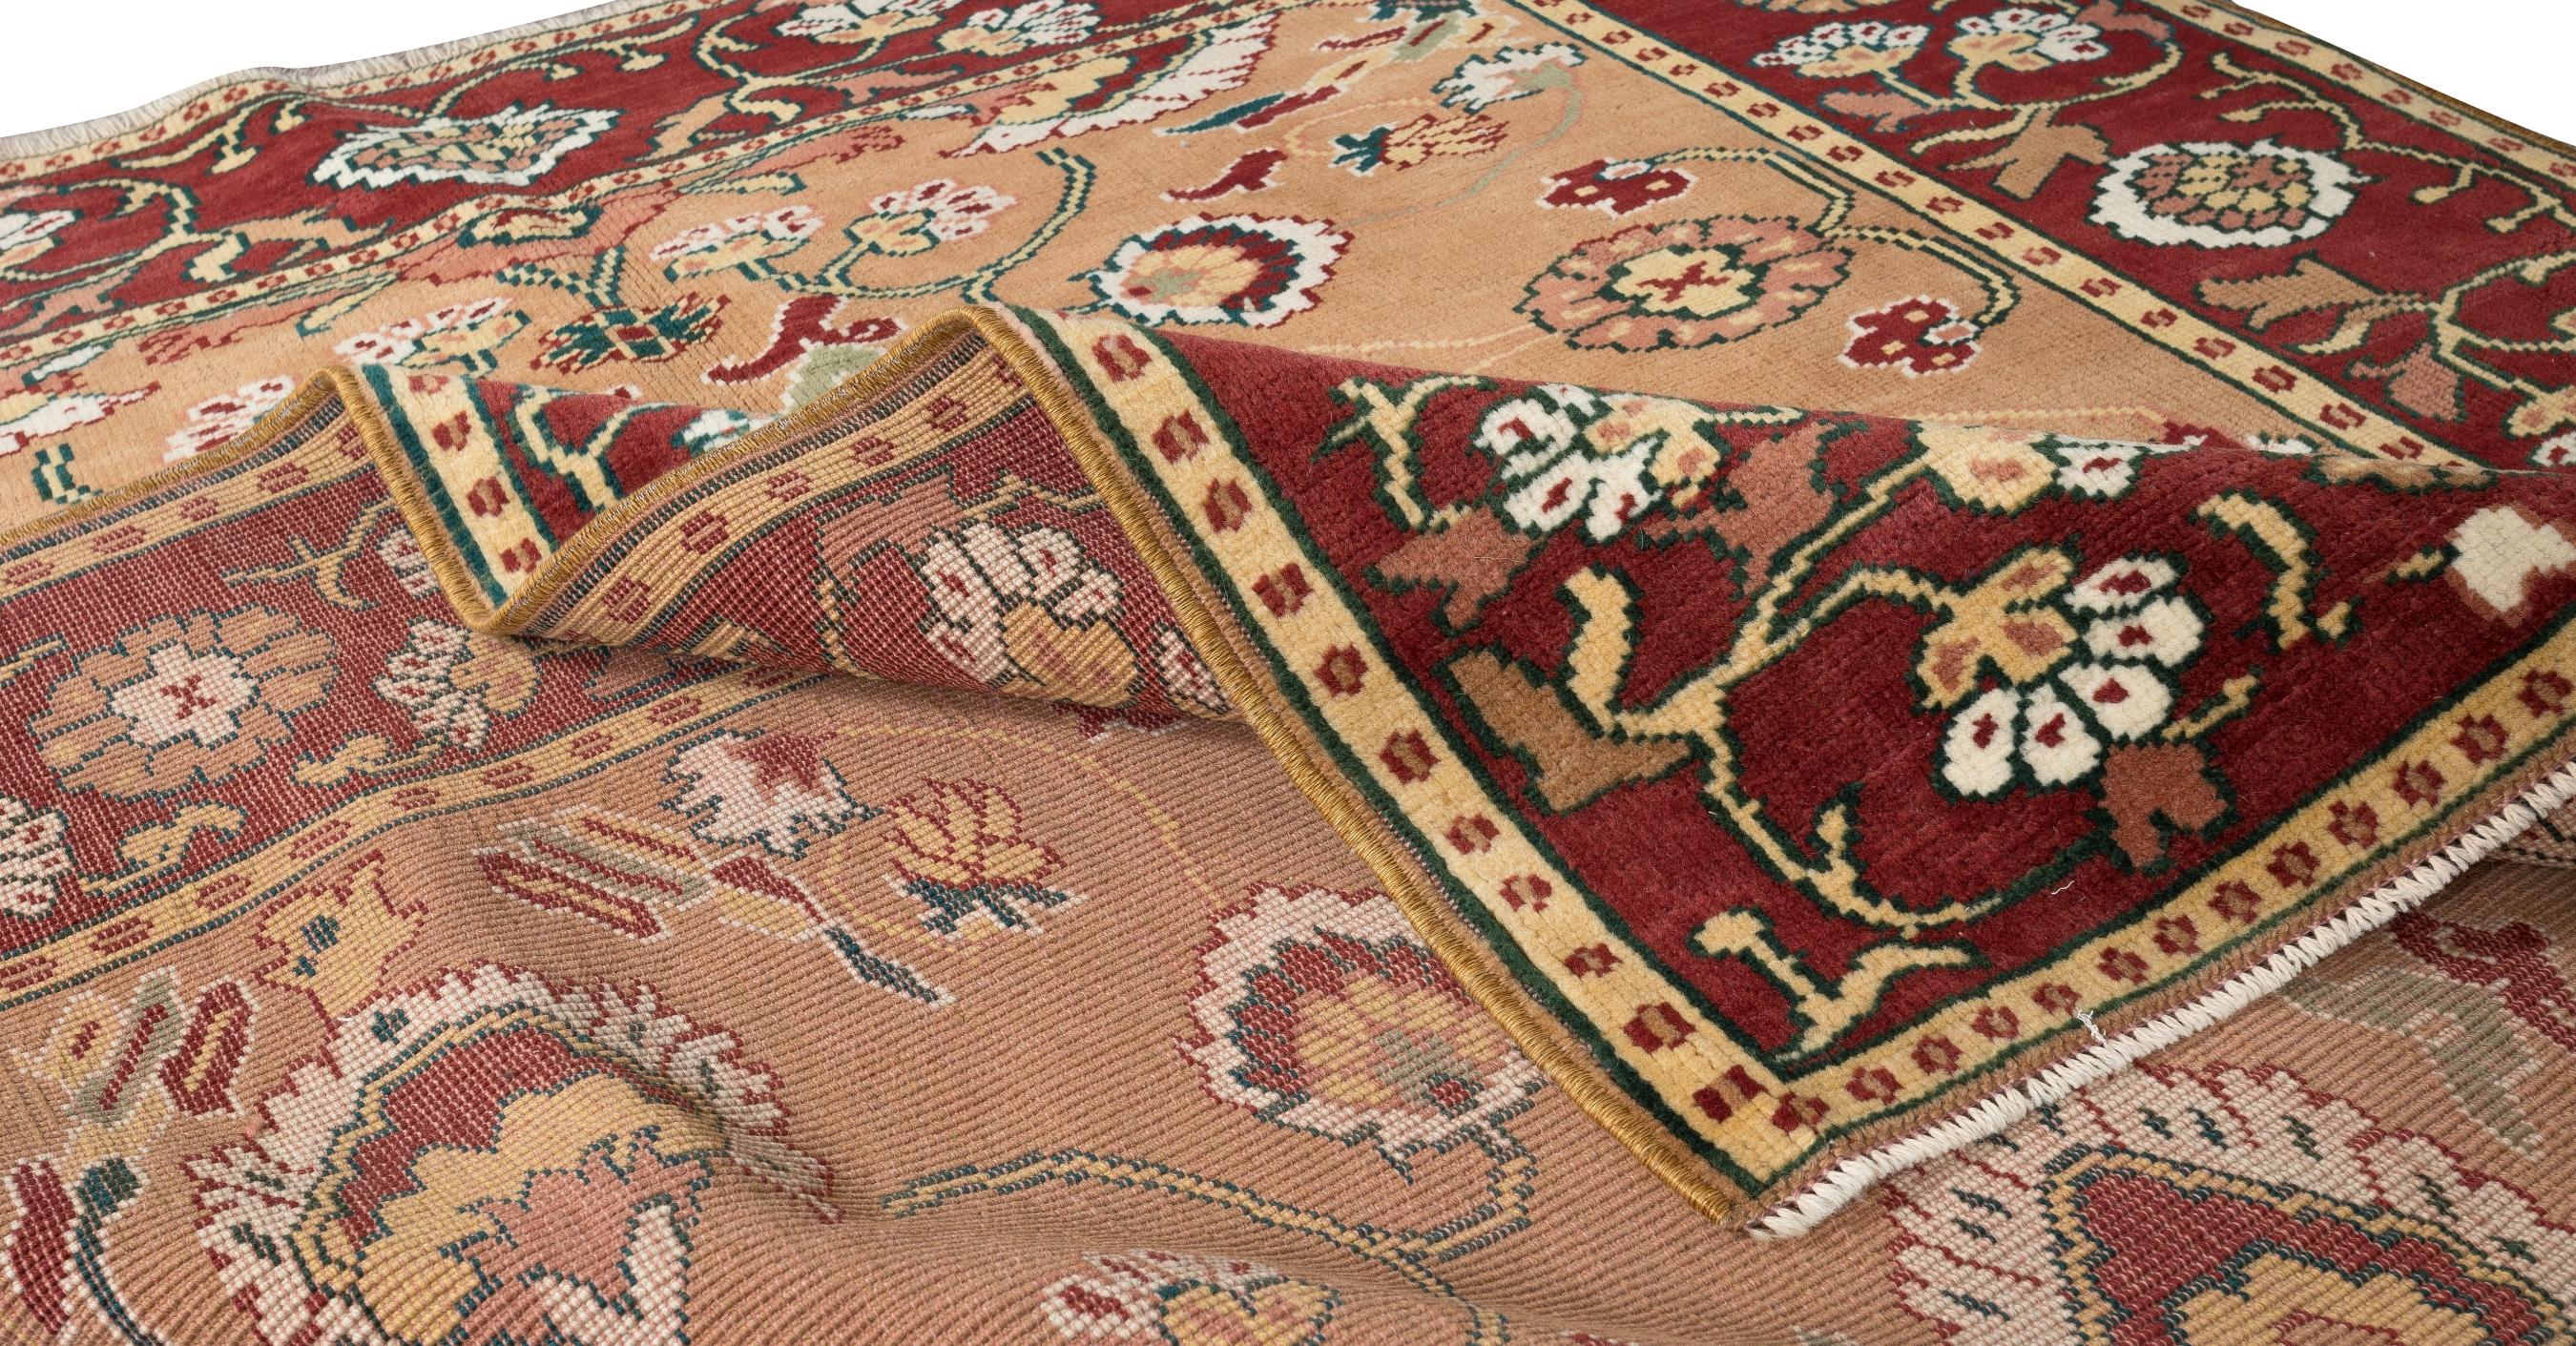 Rustic 4.6x5.5 Ft Vintage Turkish Rug with Floral Design, One of a Kind Handmade Carpet For Sale